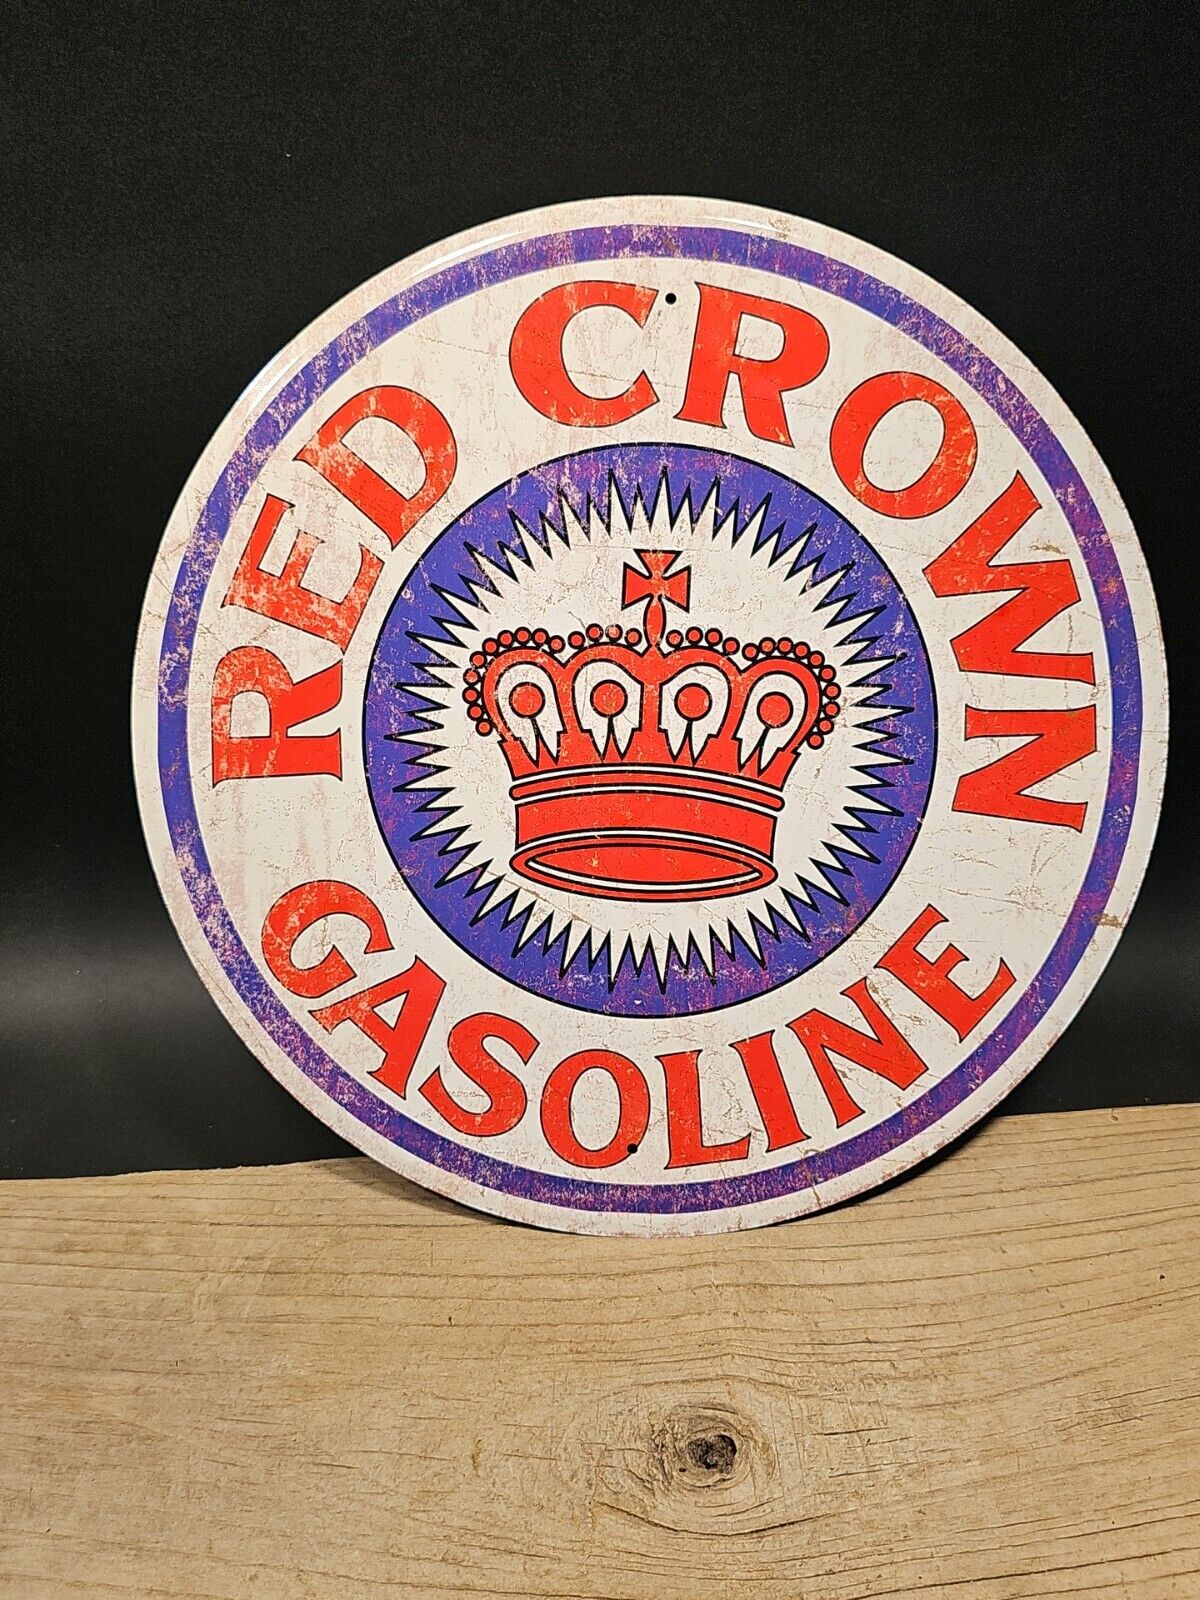 12" Antique Vintage Style Round Metal Gasoline Sign Plaque